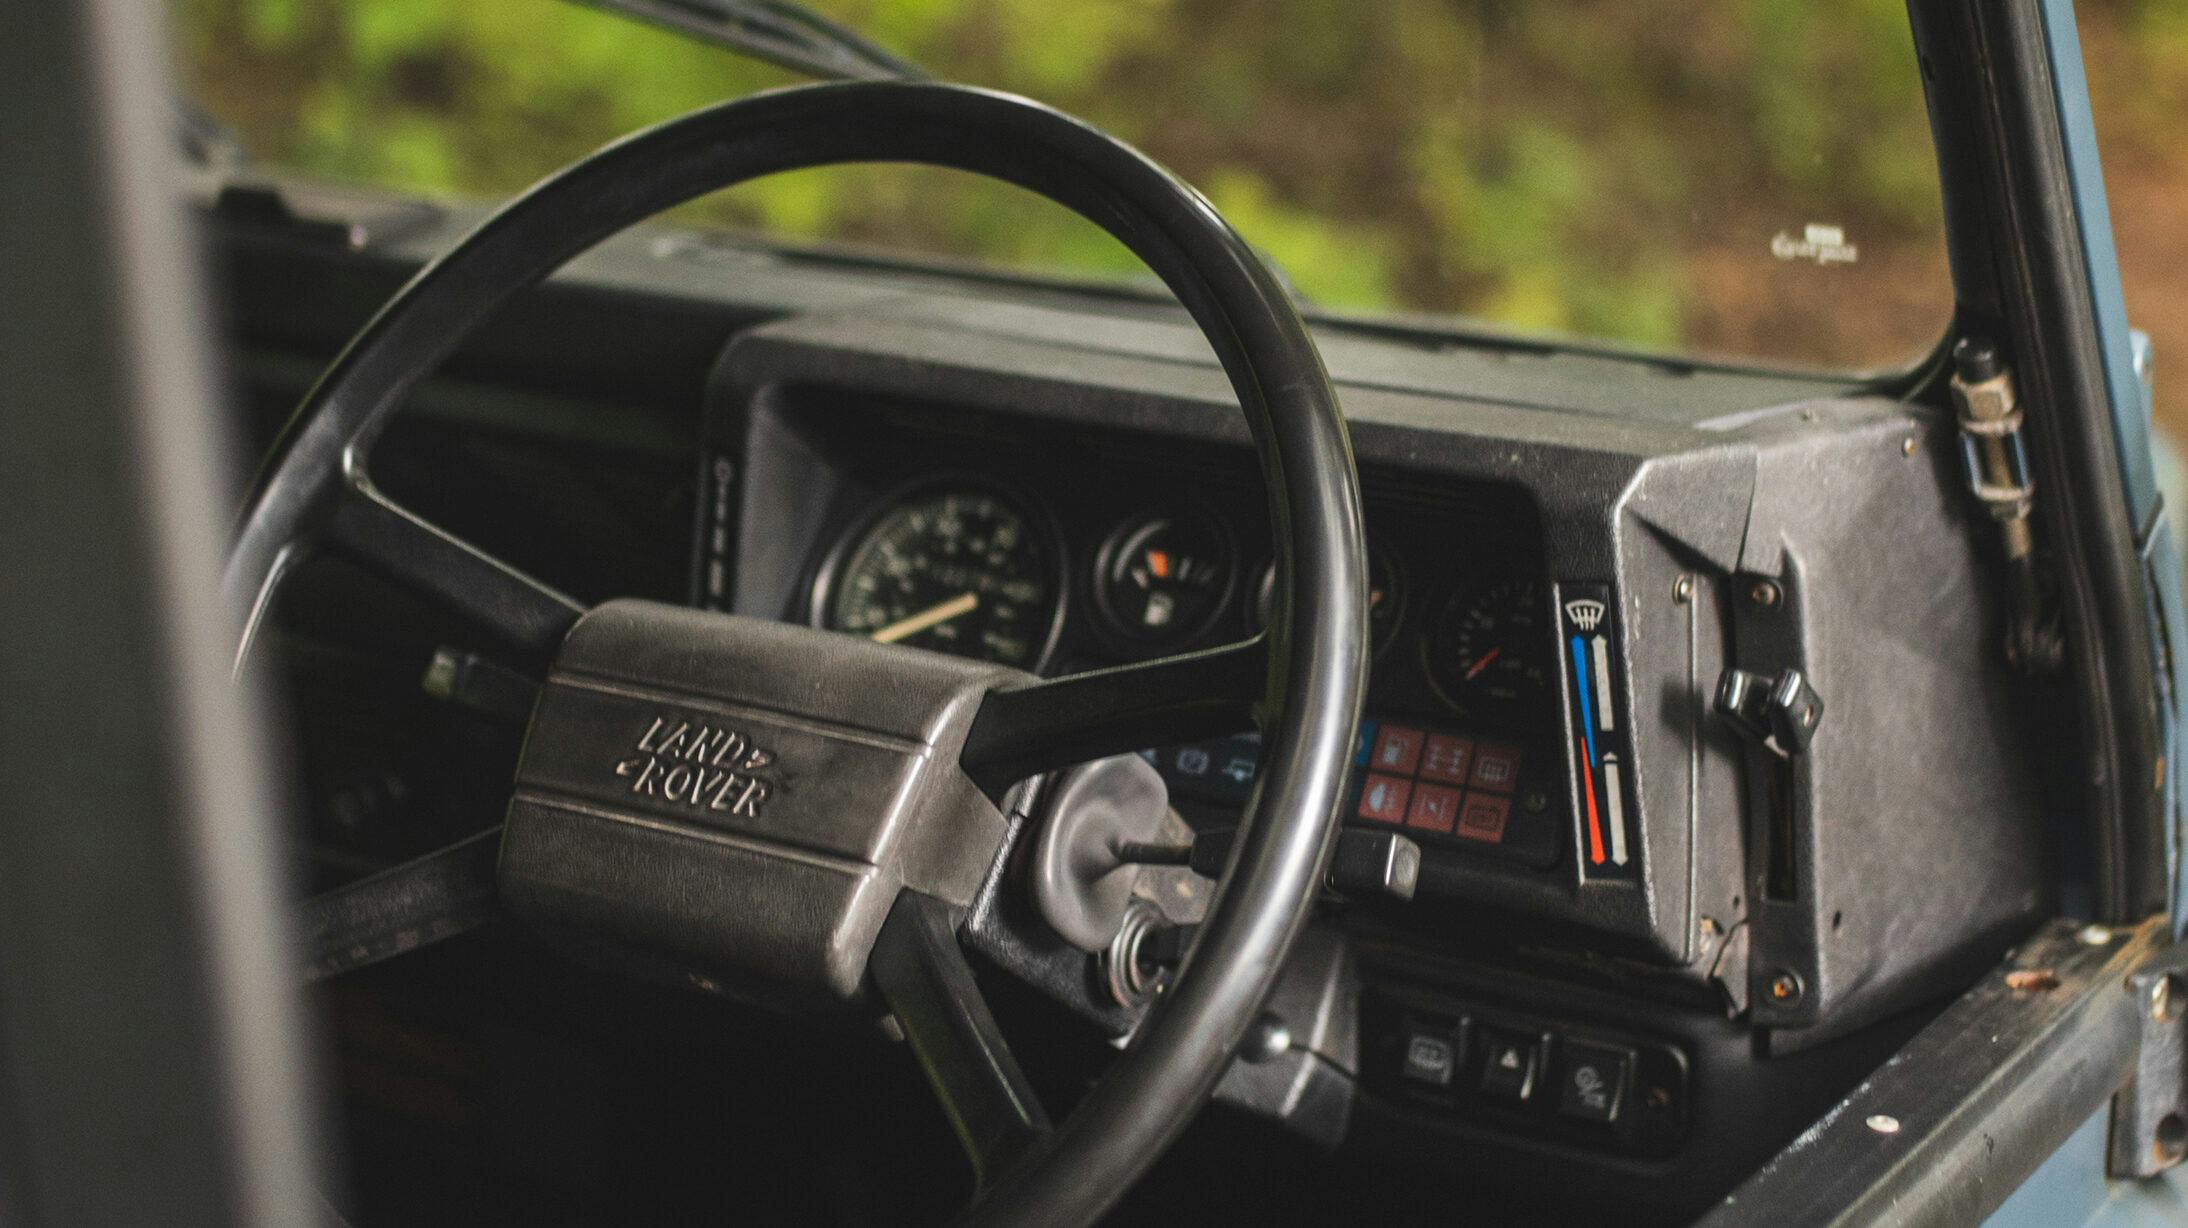 1992 Land Rover Defender interior steering wheel